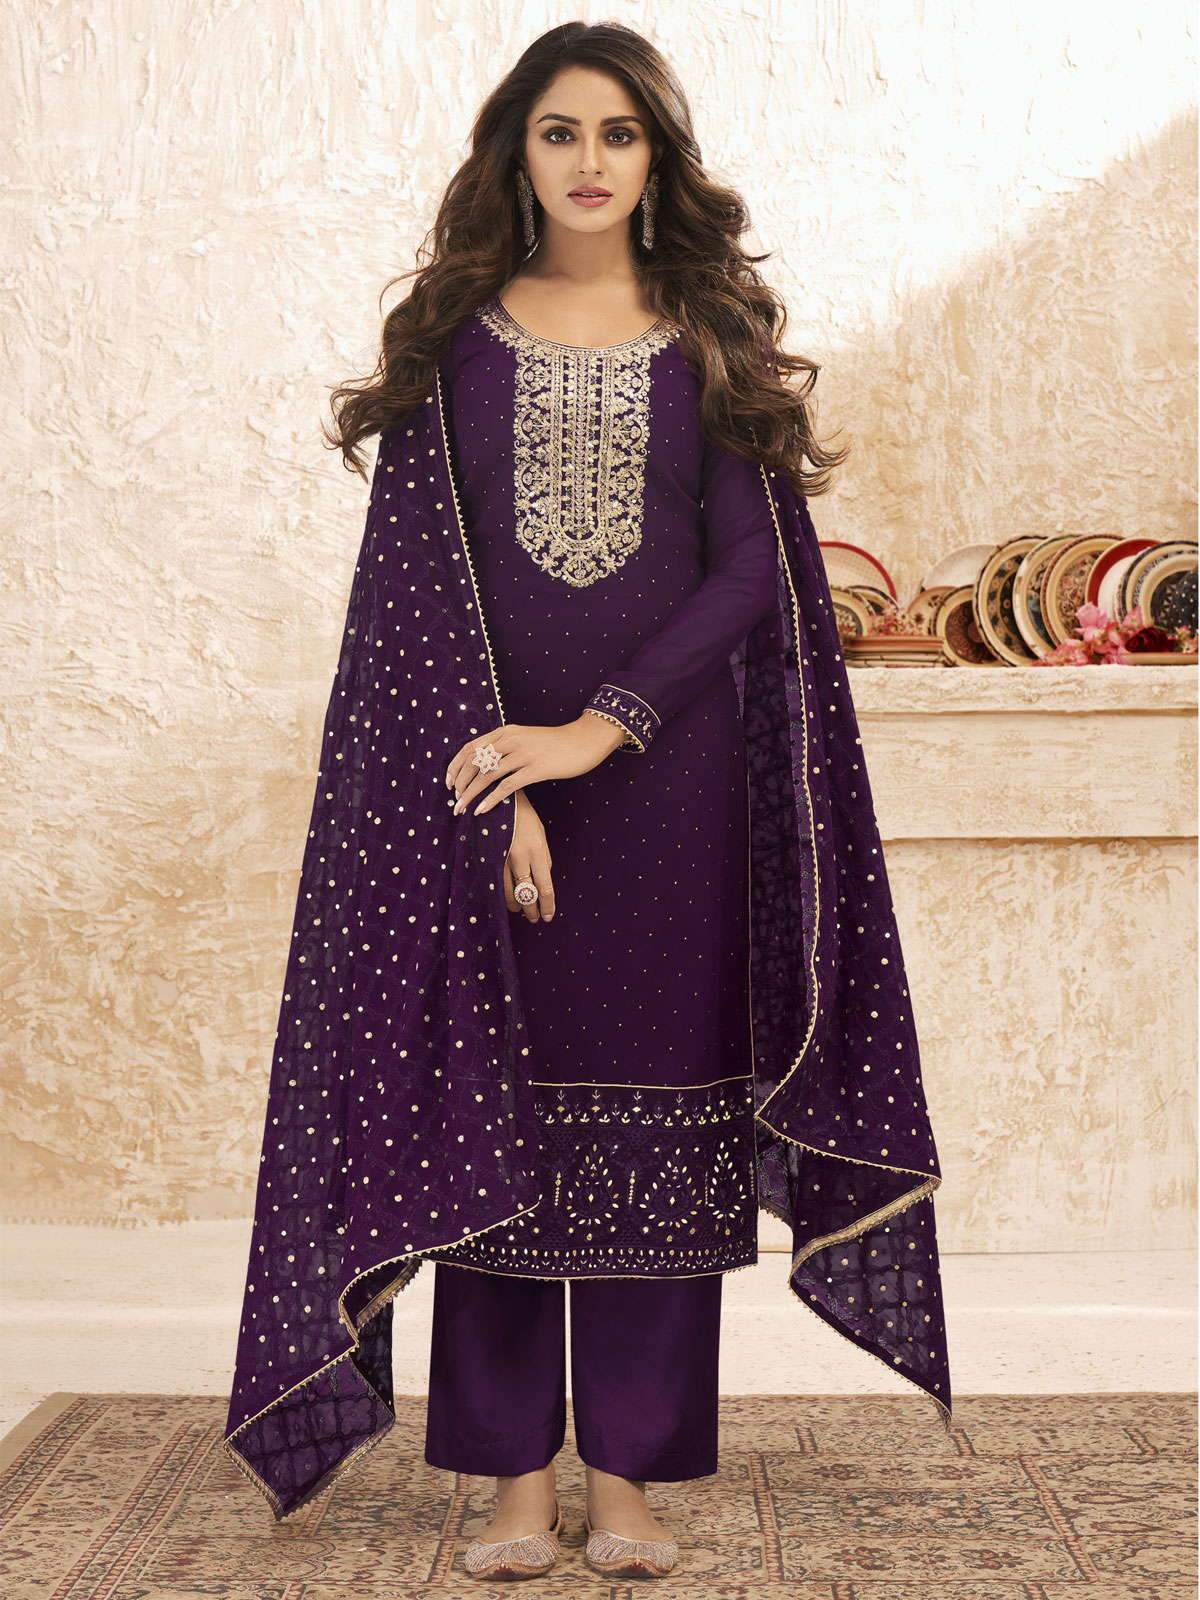 Designer Purple Satin Silk Punjabi Suit Latest Salwar Kameez Suit Duppata  Made to Measure Patiala Suit for Womens & Girls Festive Wear Suits - Etsy